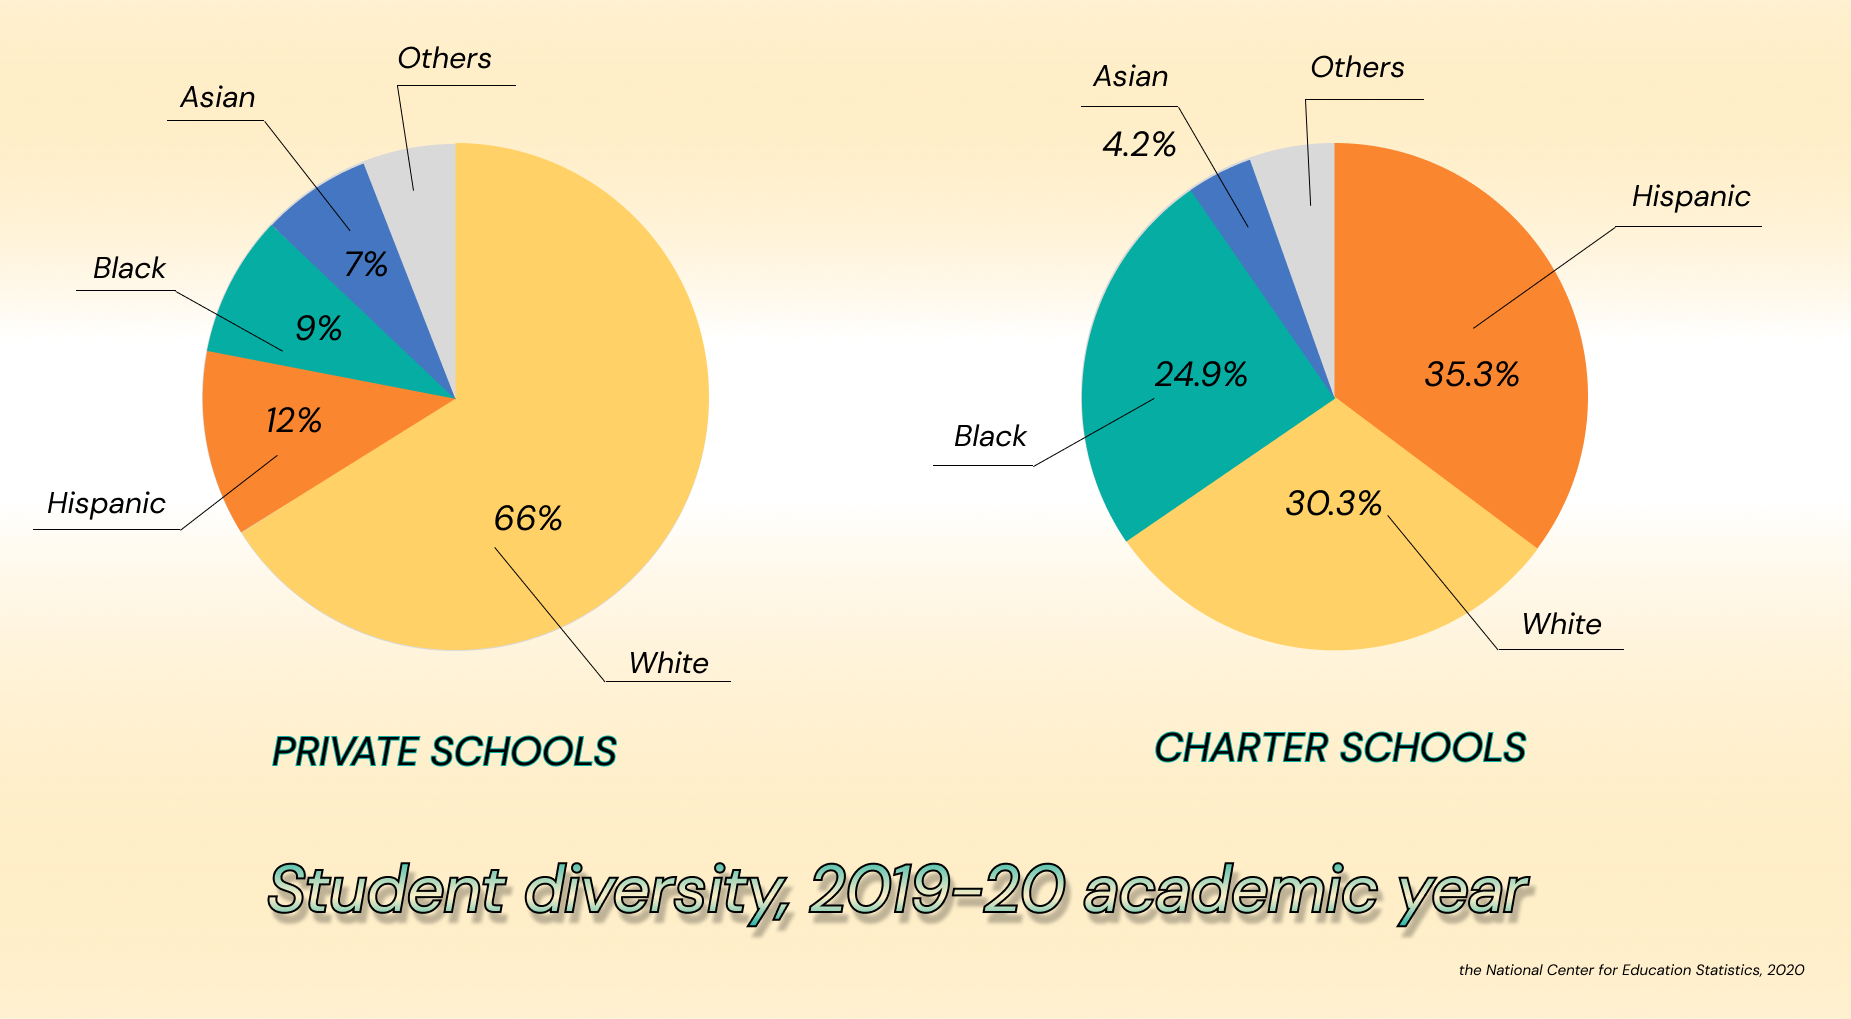 Student diversity, 2019-20 academic year